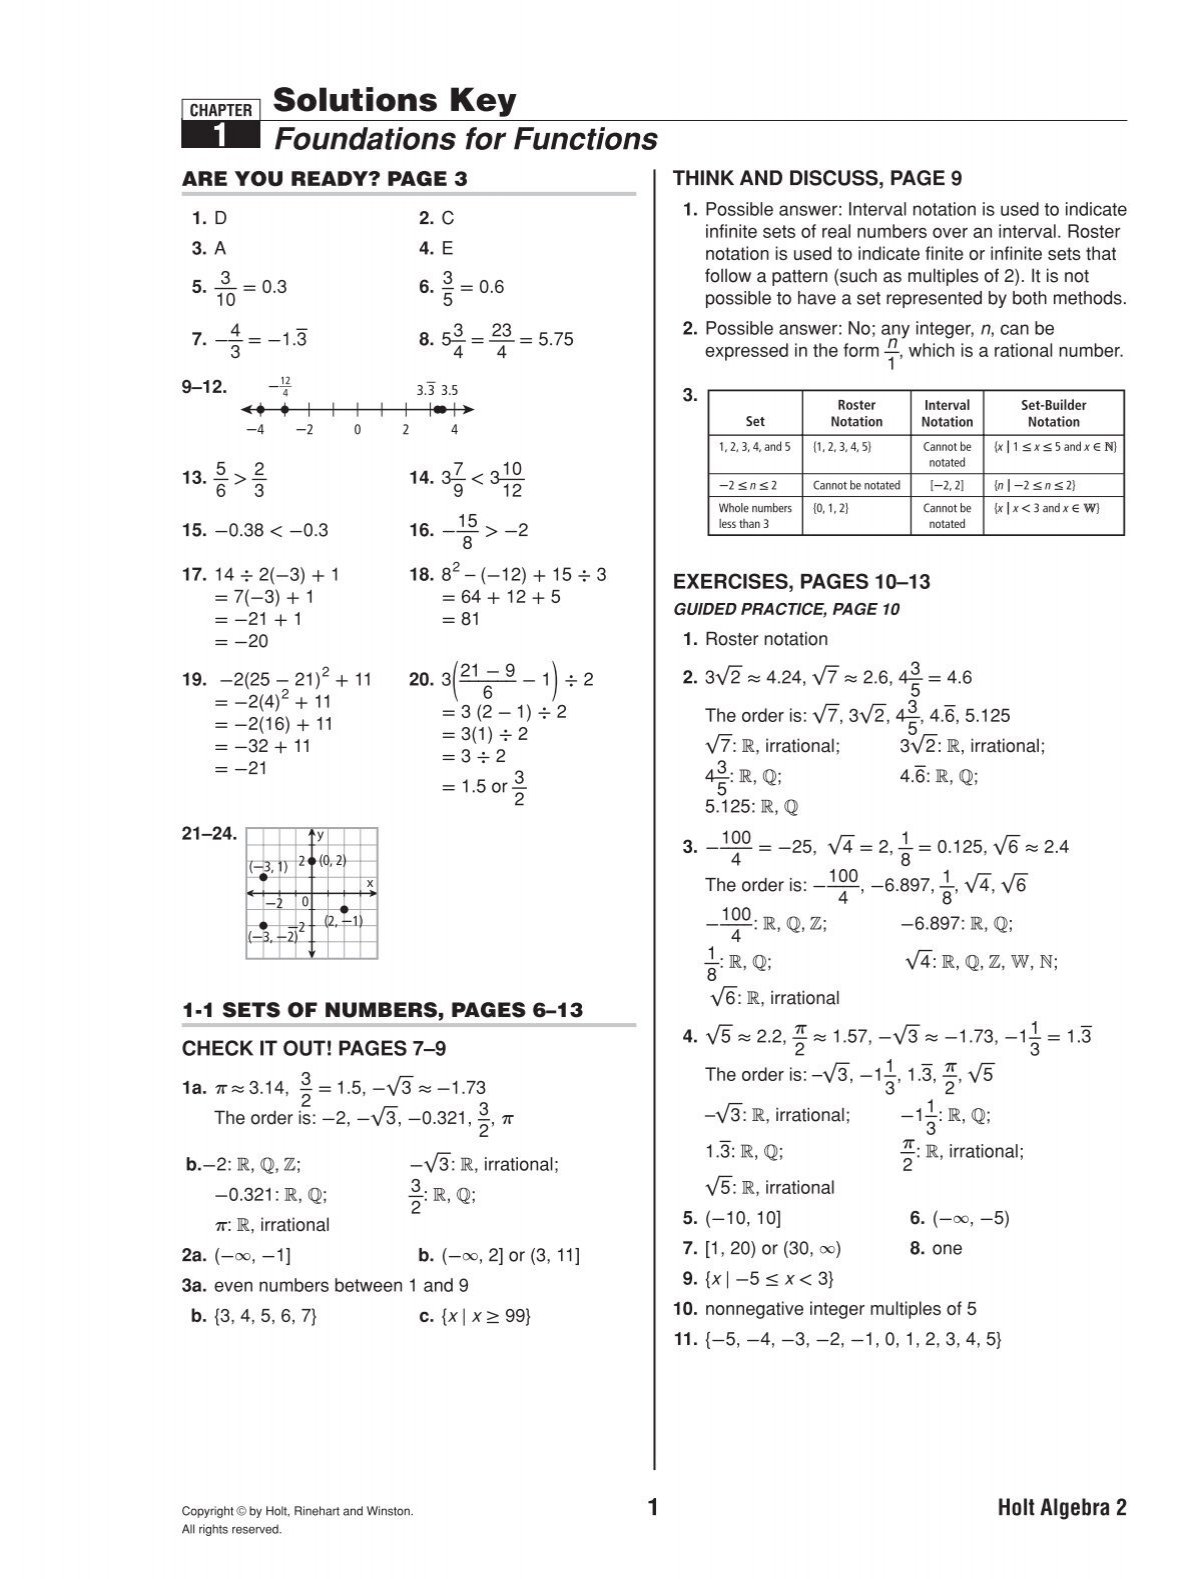 Algebra 2 Ch 1 Text Key Alg 2 1 Solutions Key Pdf Peninsula